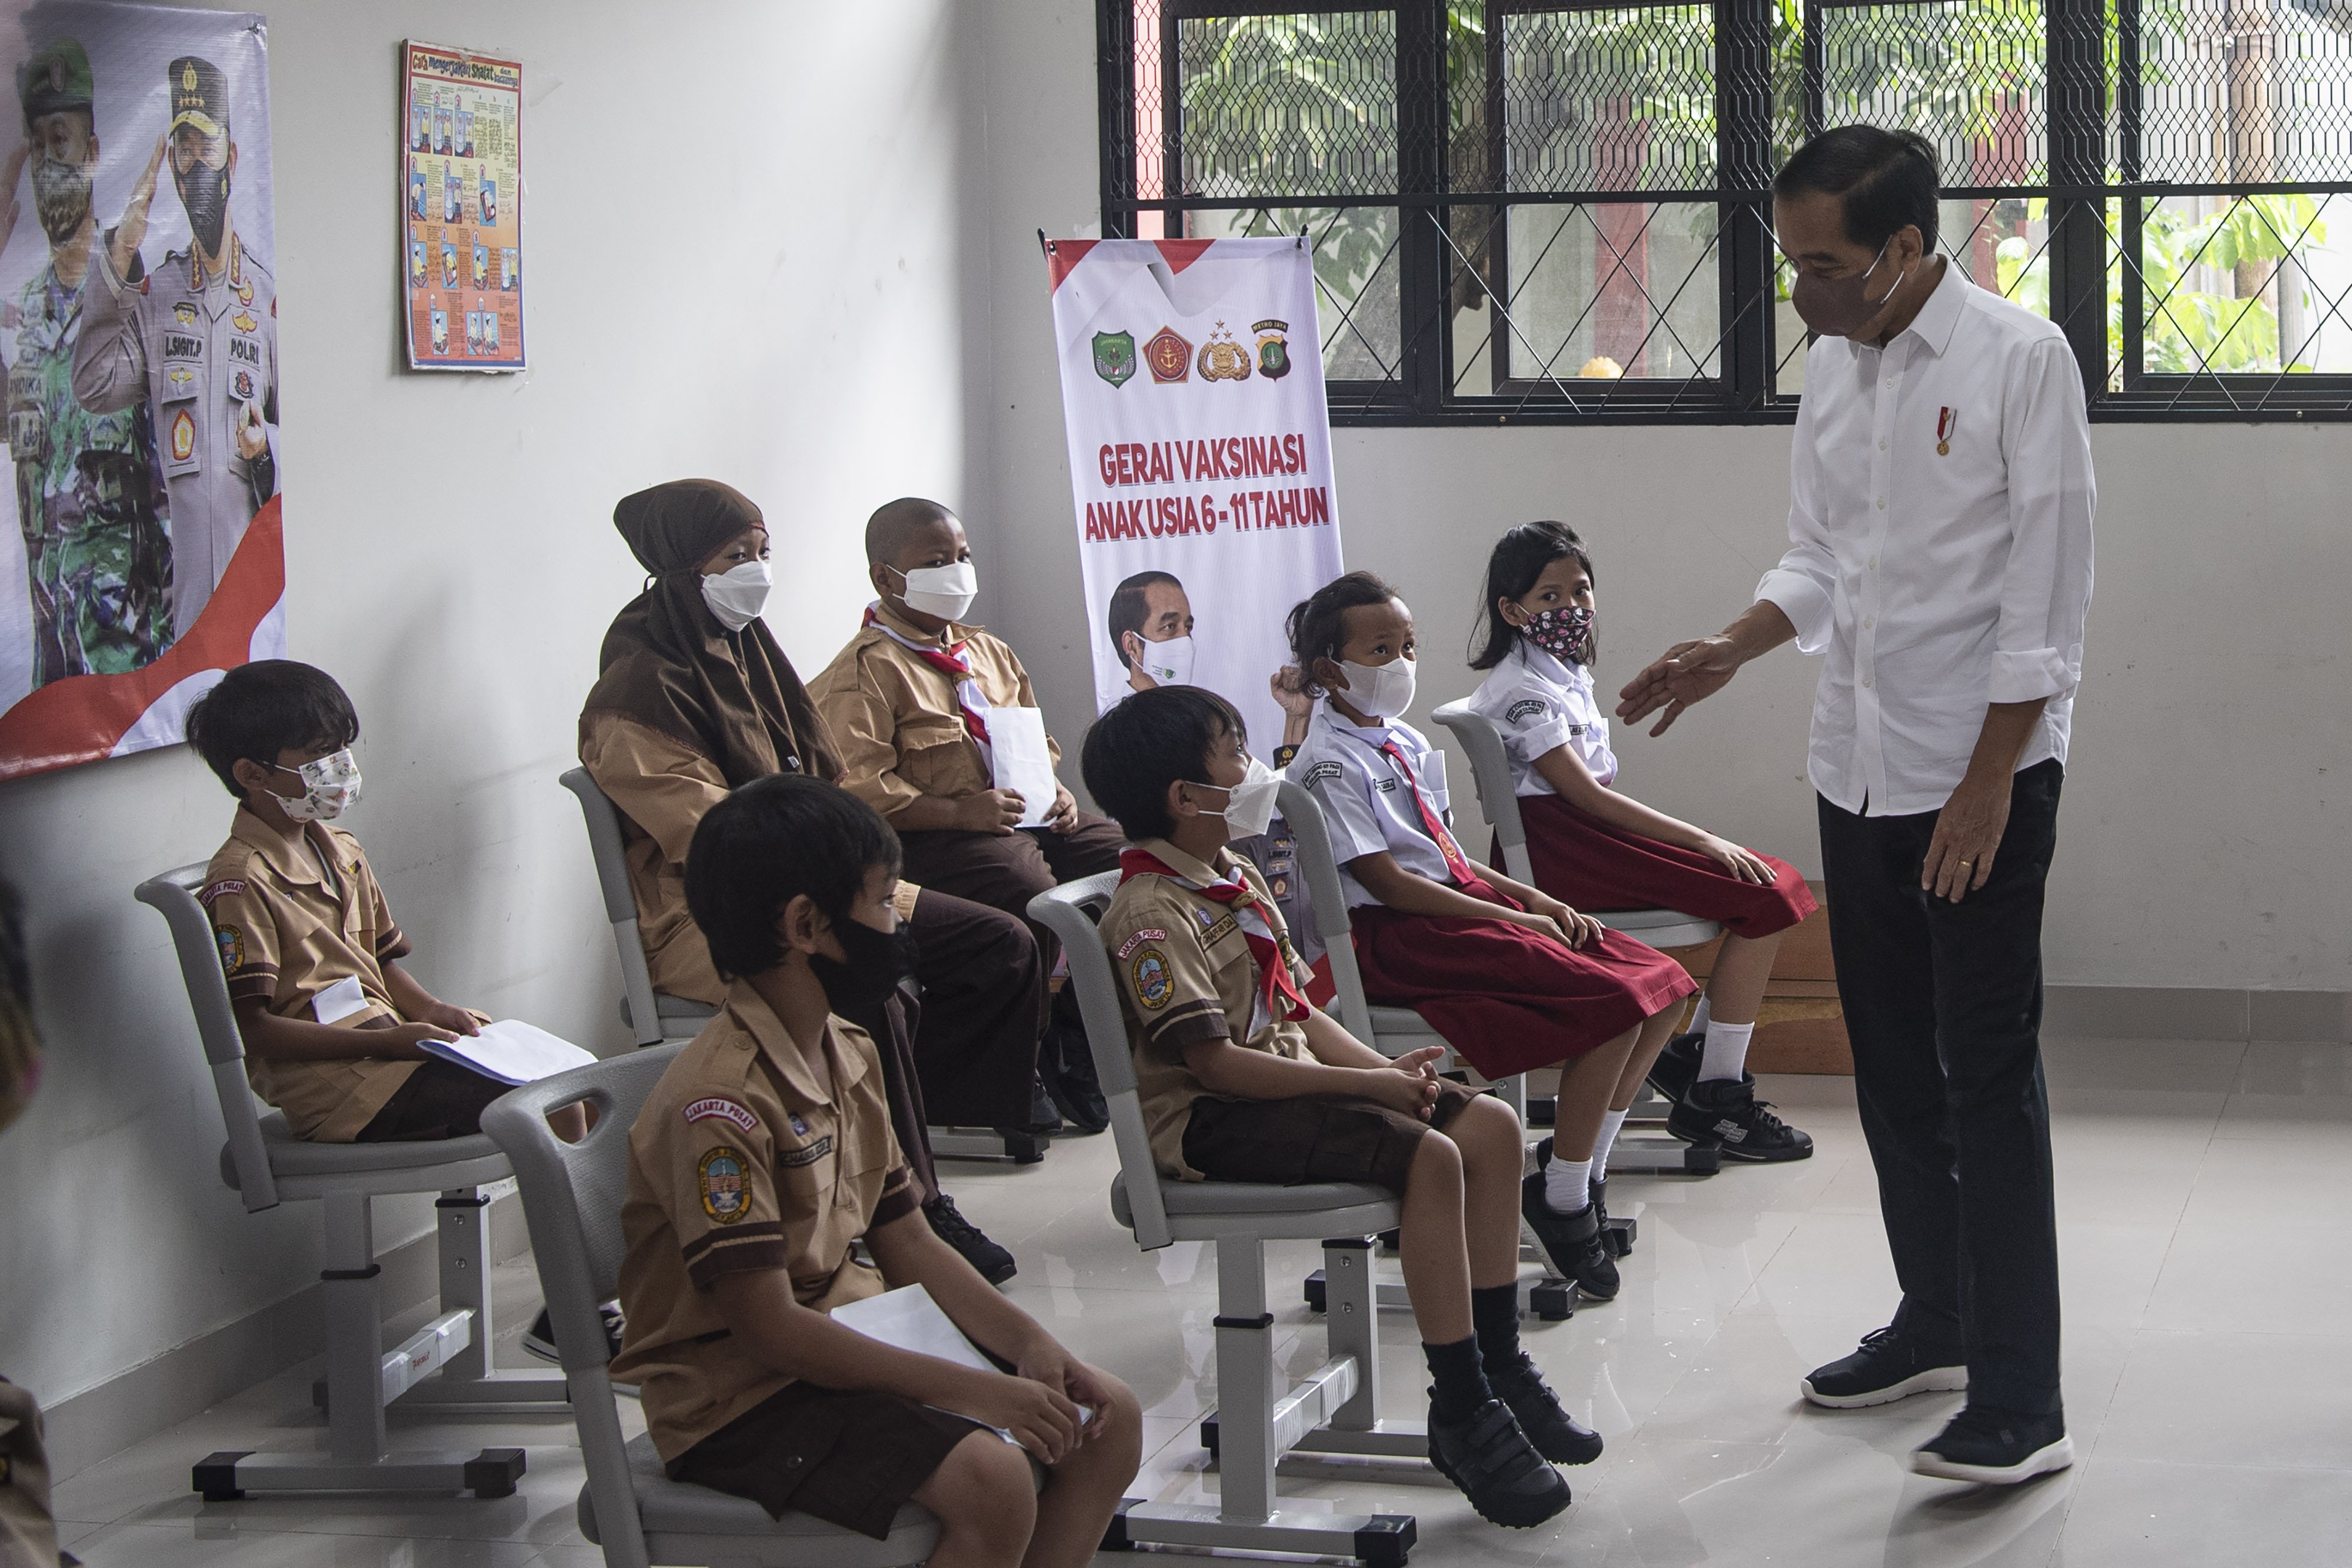 Presiden Joko Widodo (kanan) berdialog dengan sejumlah anak yang menunggu observasi setelah vaksinasi COVID-19 di Kompleks SDN Cideng, Gambir, Jakarta Pusat, Rabu (15/12/2021). Presiden meninjau langsung vaksinasi COVID-19 bagi anak-anak usia 6-11 tahun. ANTARA FOTO/Sigid Kurniawan/rwa.